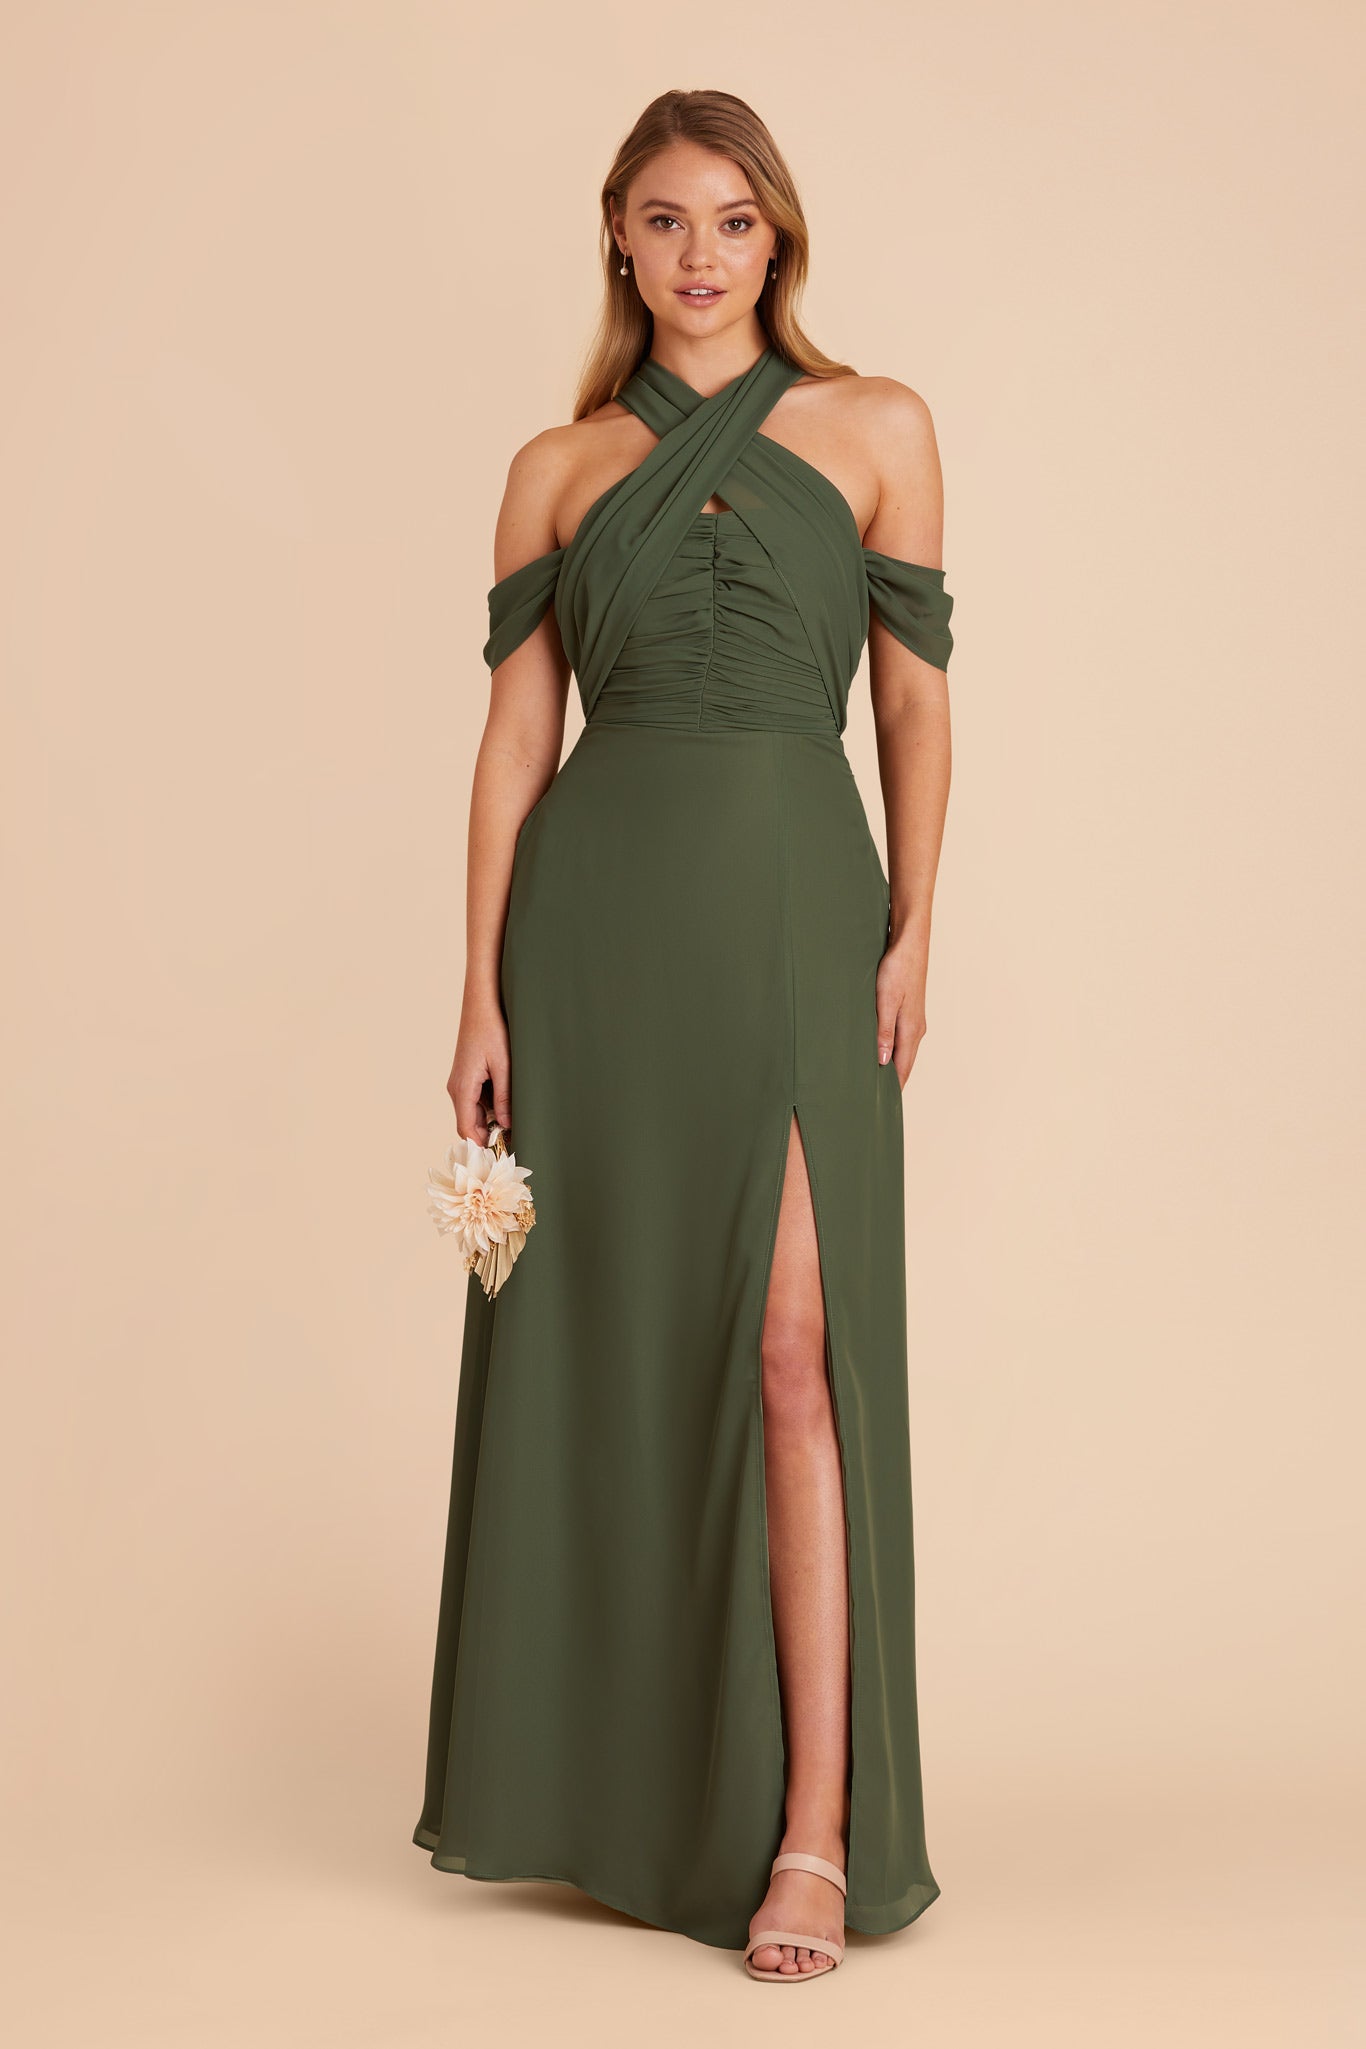 Olive Cara Chiffon Dress by Birdy Grey